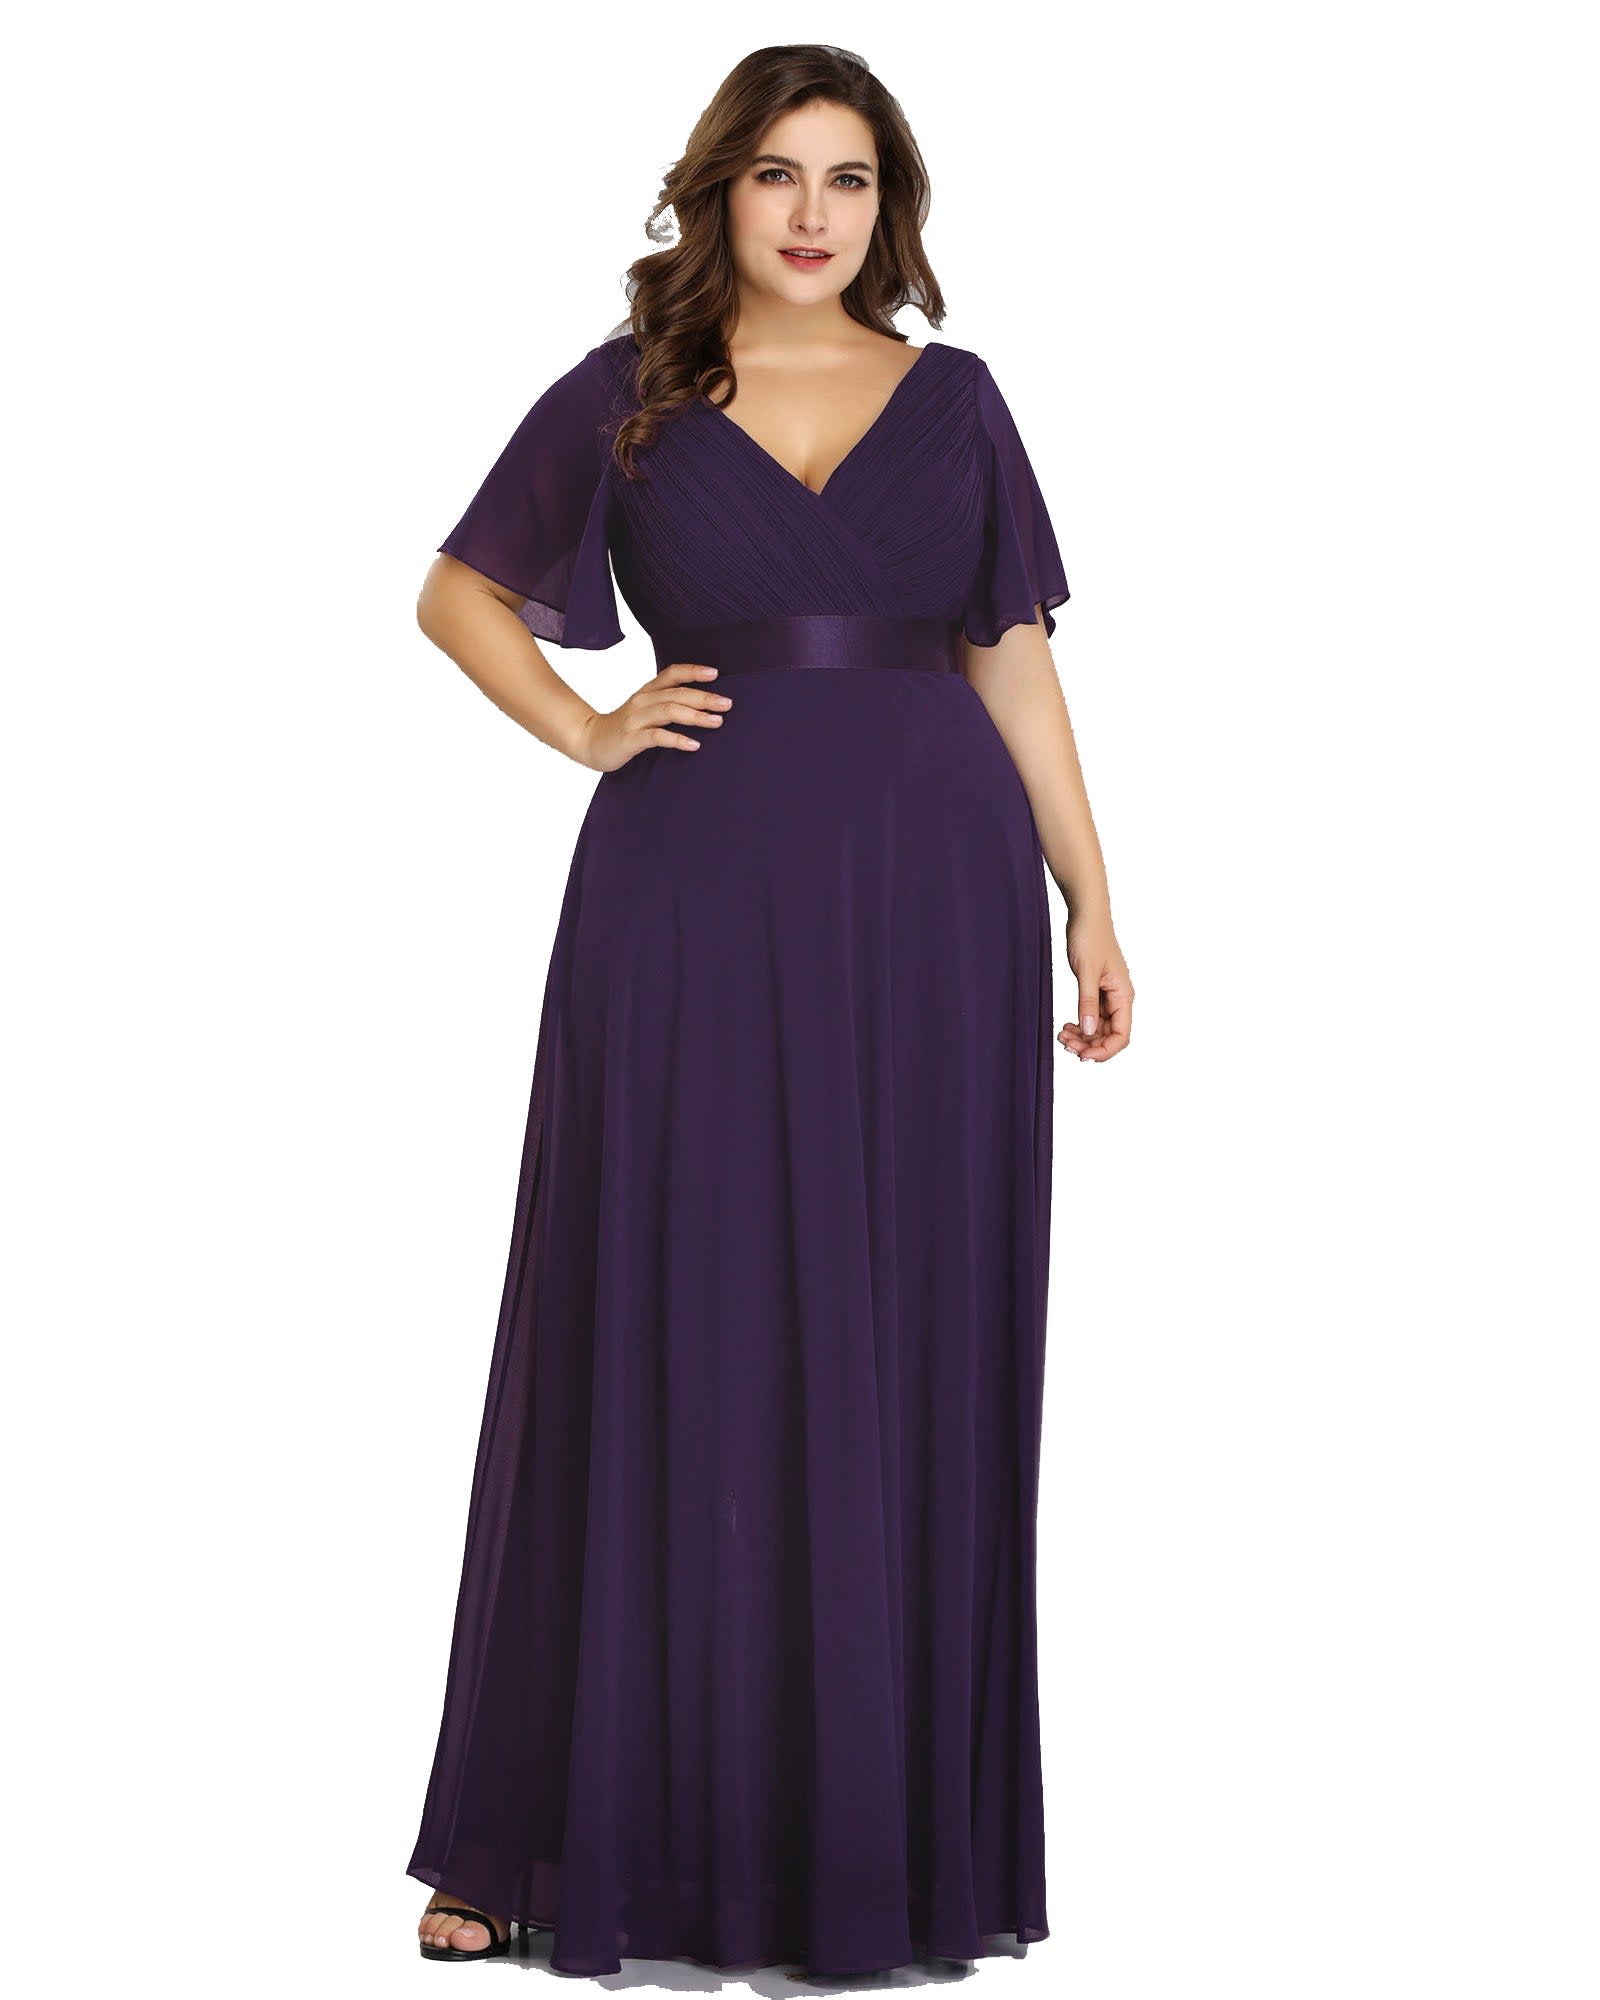 Long Chiffon Empire Waist Bridesmaid Dress with Short Flutter Sleeves | Dark Purple